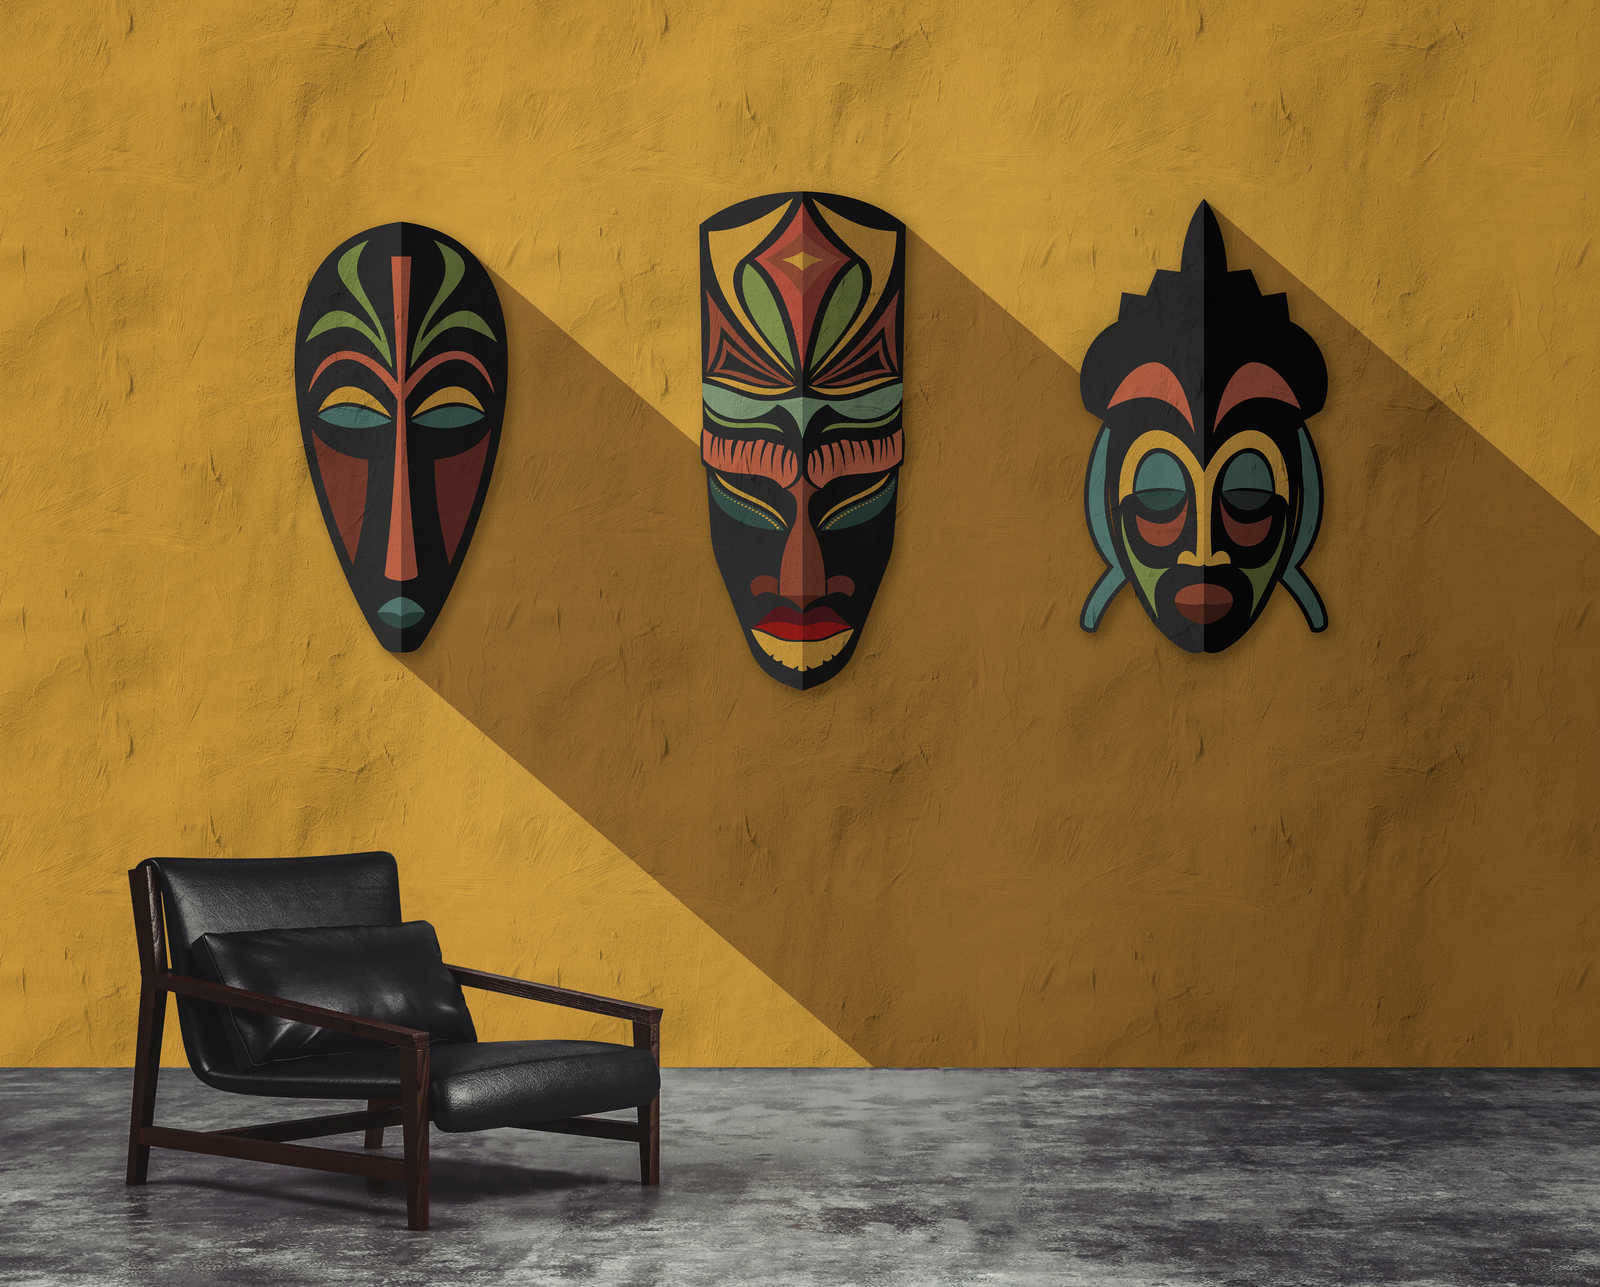             Zulu 1 - Fotomurali giallo senape, maschere africane Zulu Design
        